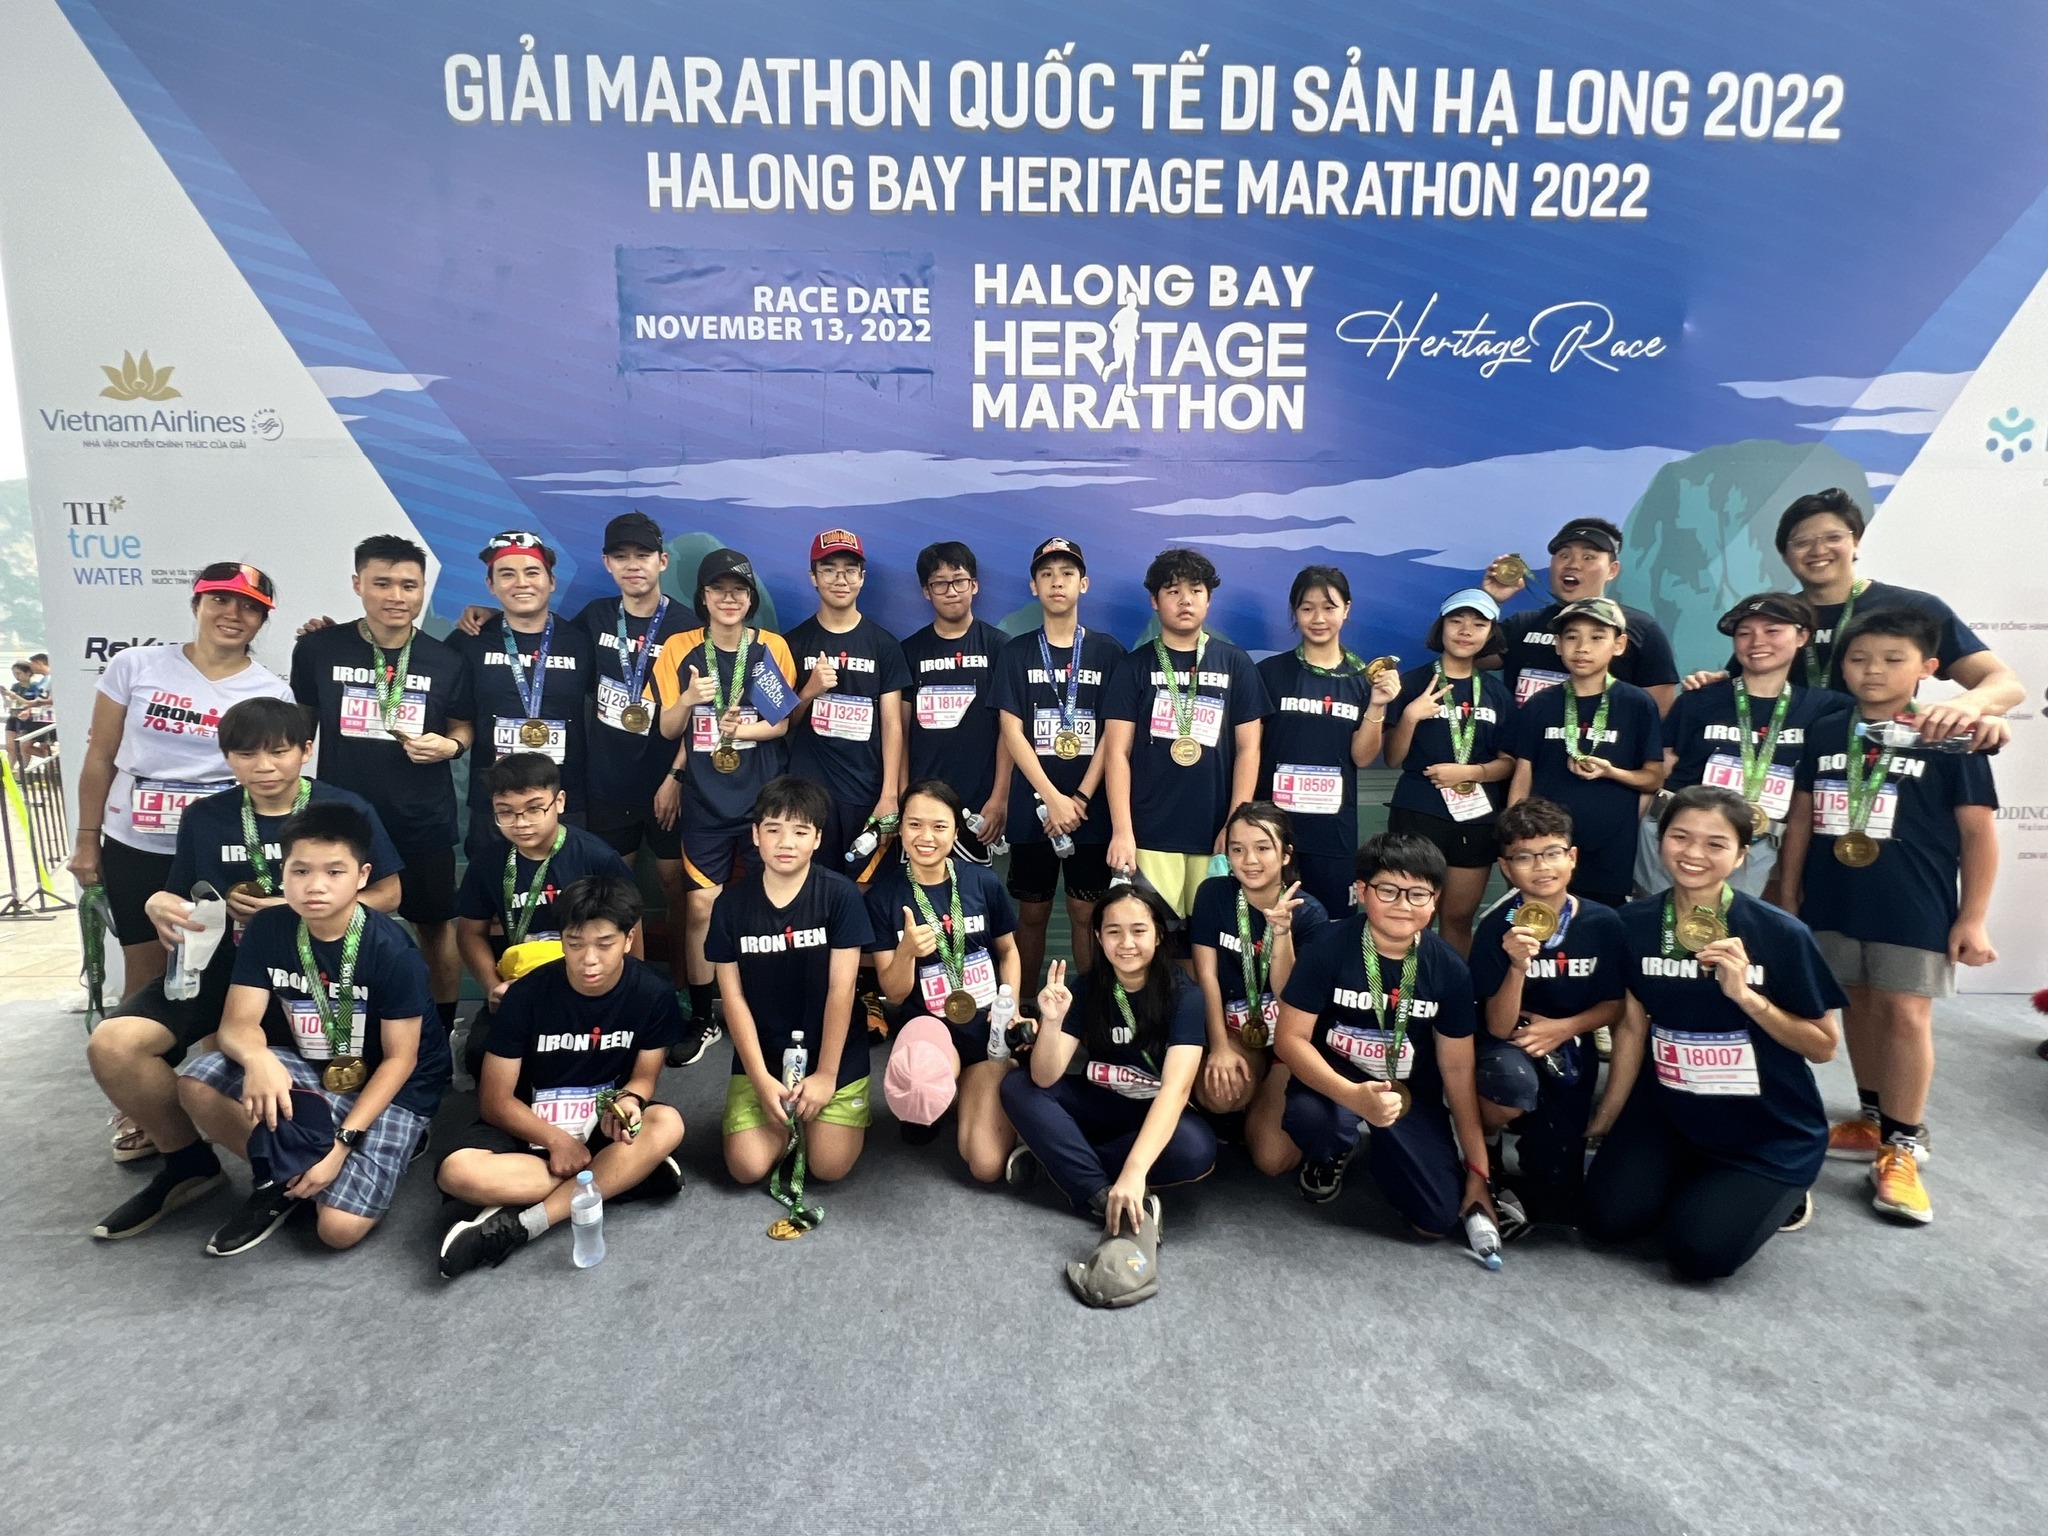 Running Challenge at Halong Bay Heritage Marathon